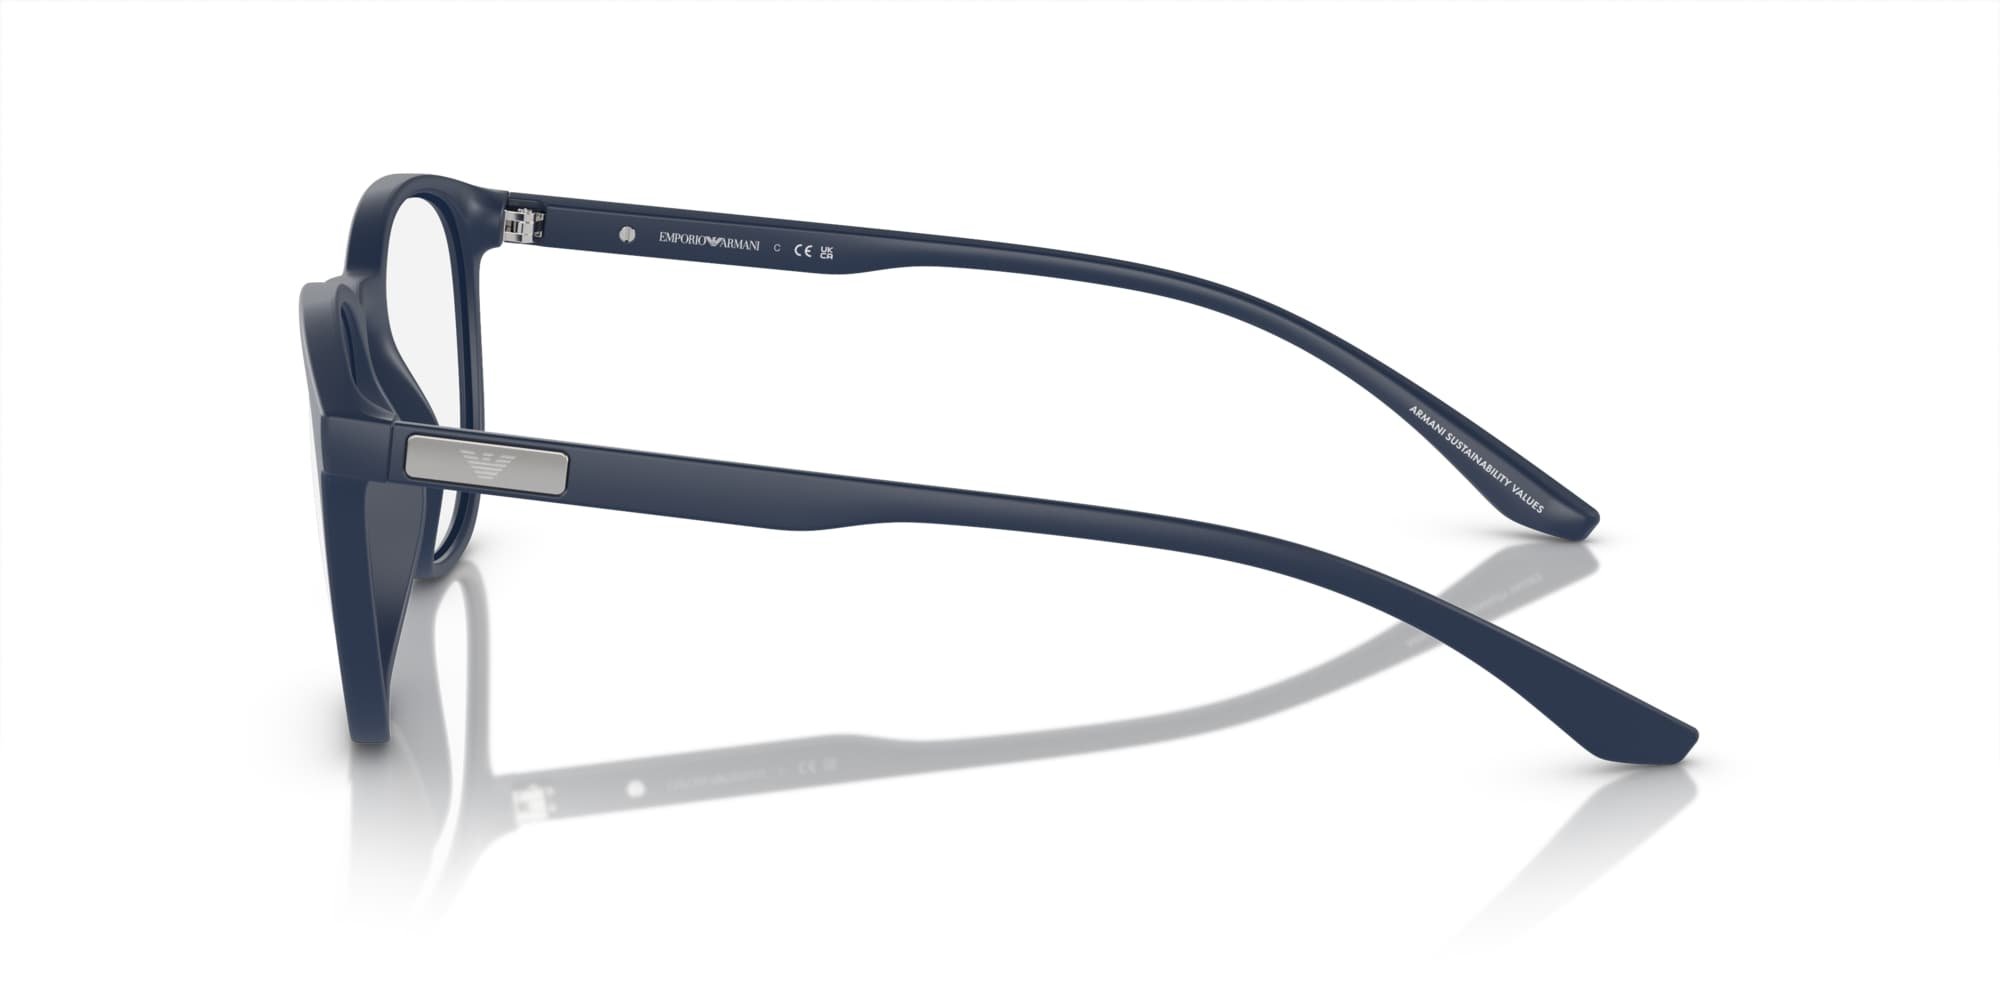 Emporio Armani Brille für Herren in blau matt EA3229 5763 51